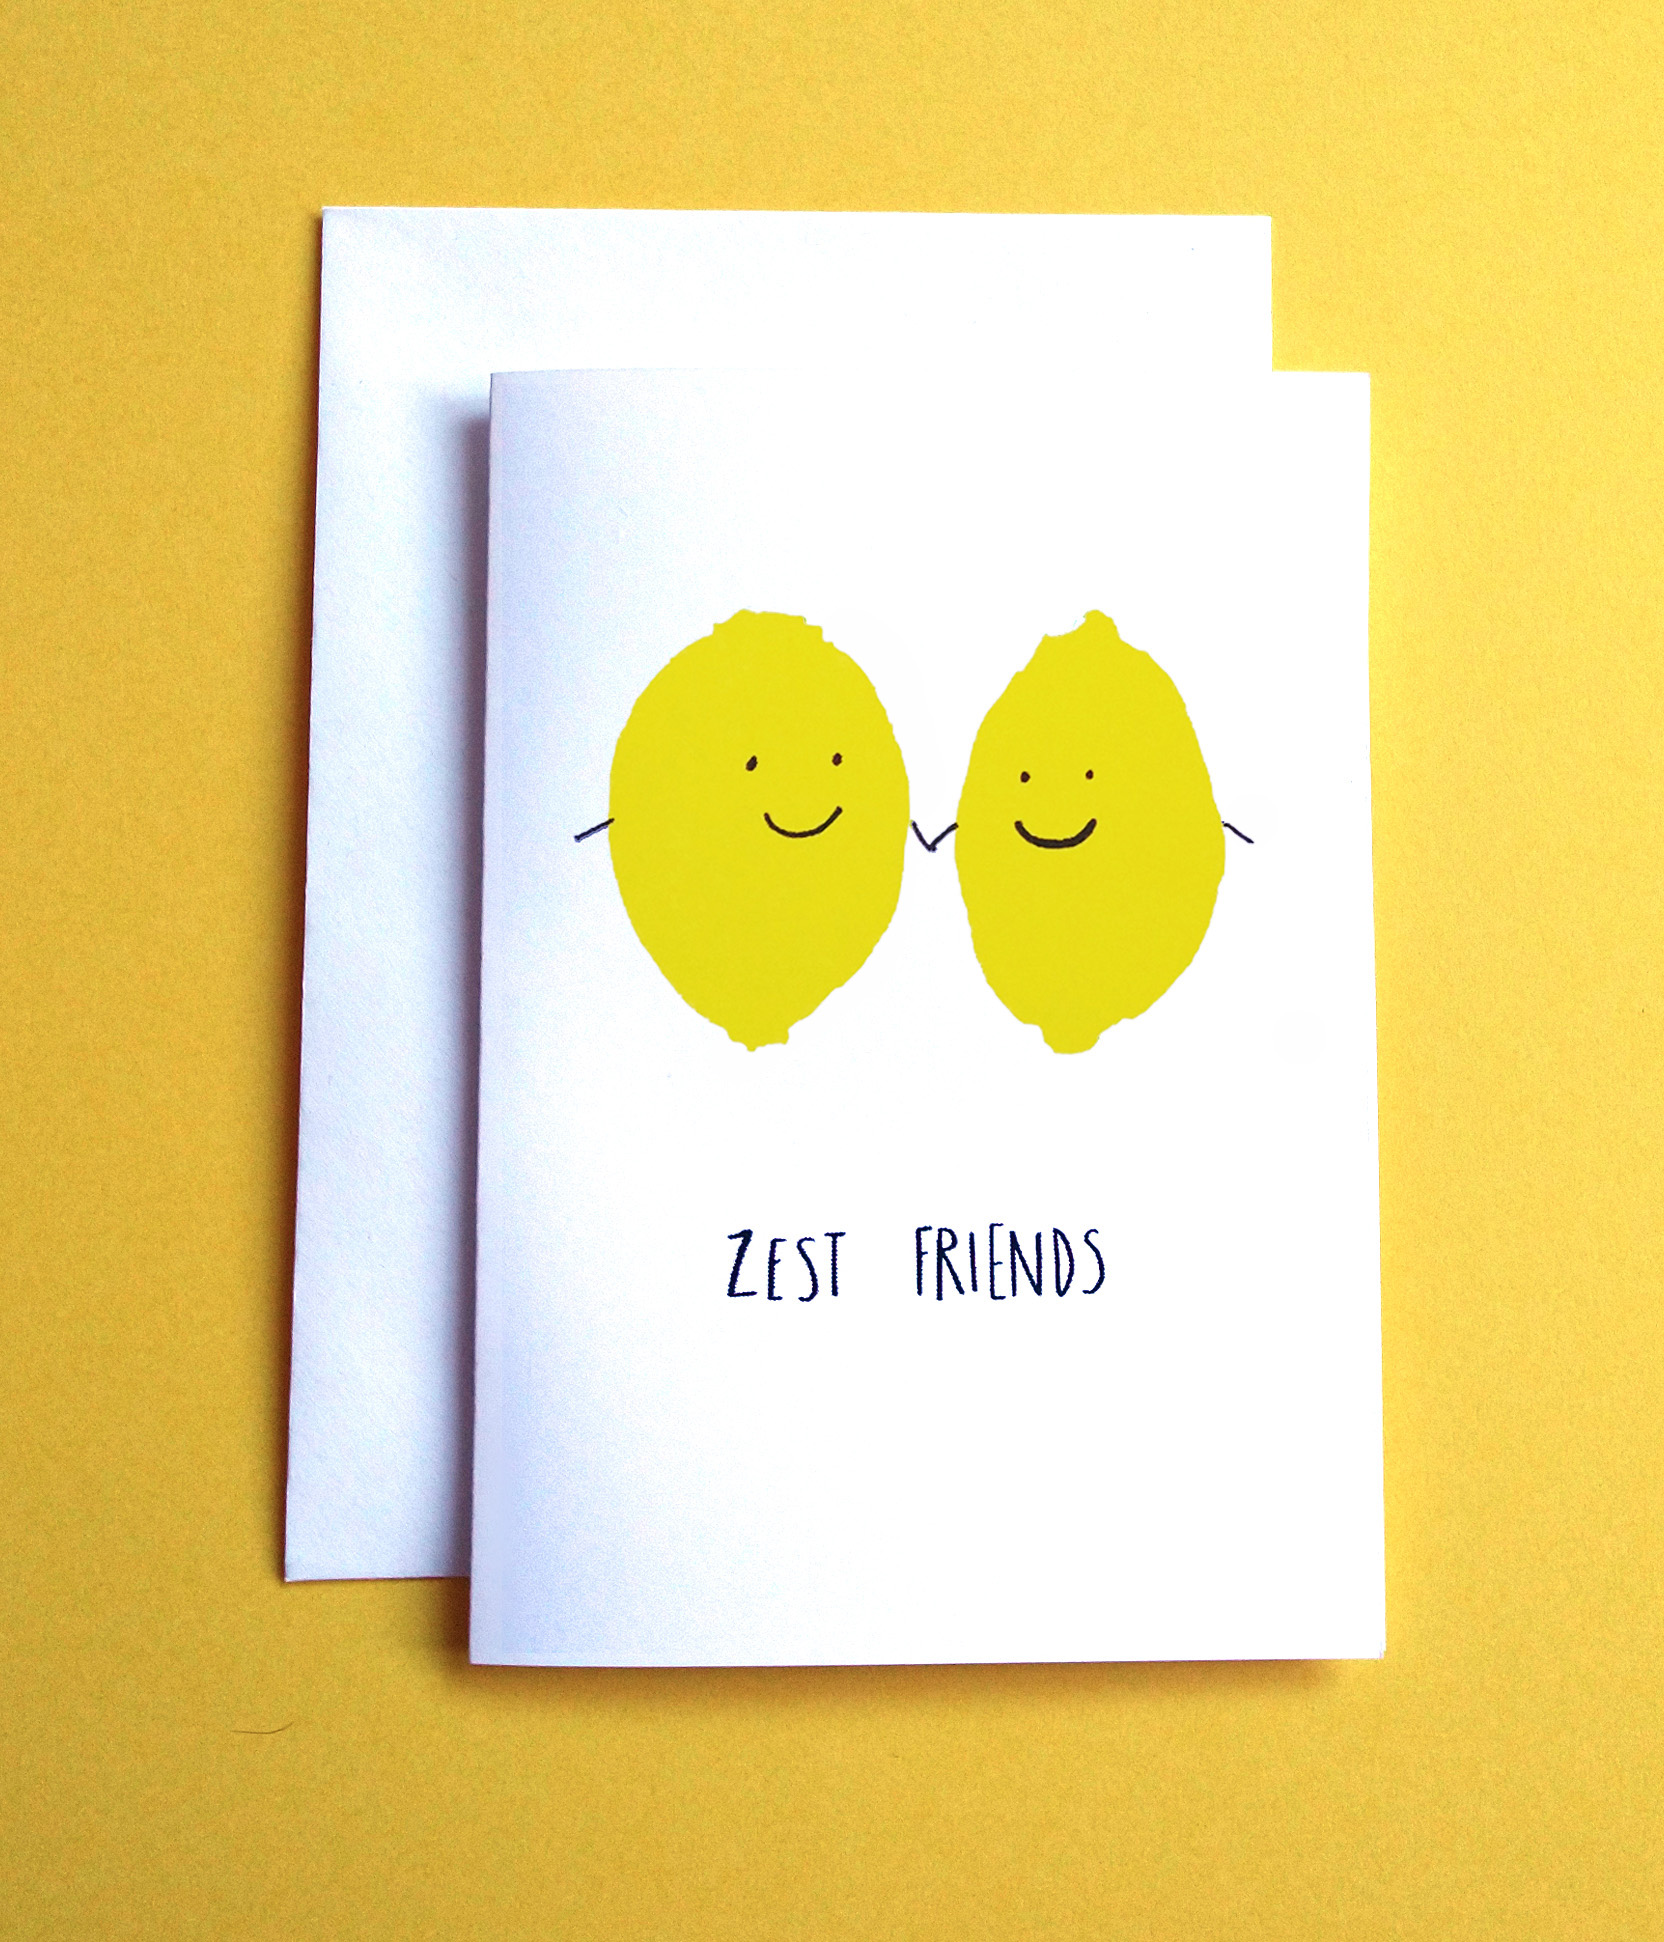 Zest Friends Riso-Printed Greetings Card by Shruti